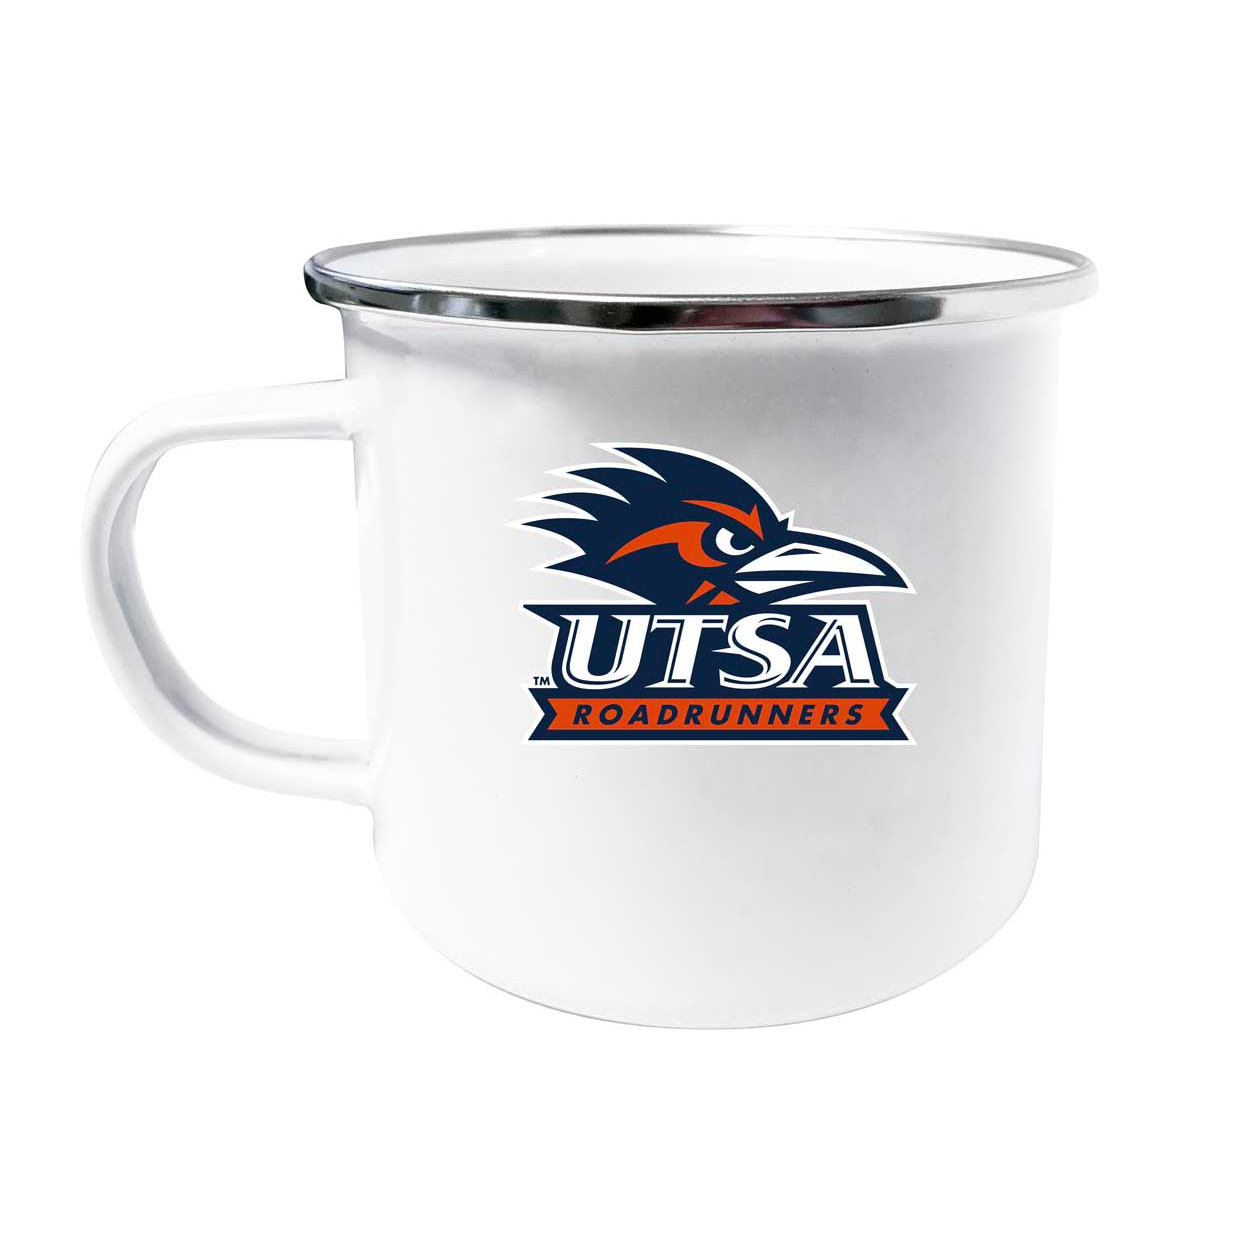 UTSA Road Runners Tin Camper Coffee Mug - Choose Your Color - Gray